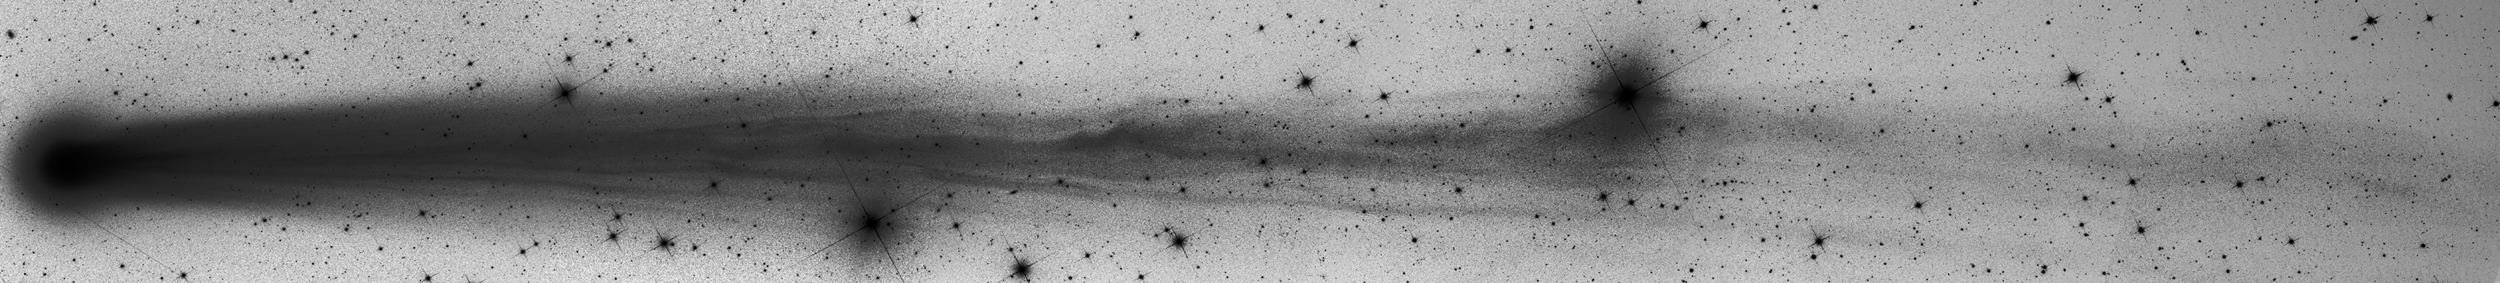 Komet C-Lovejoy 2013 R1_08_12_2013_Invert